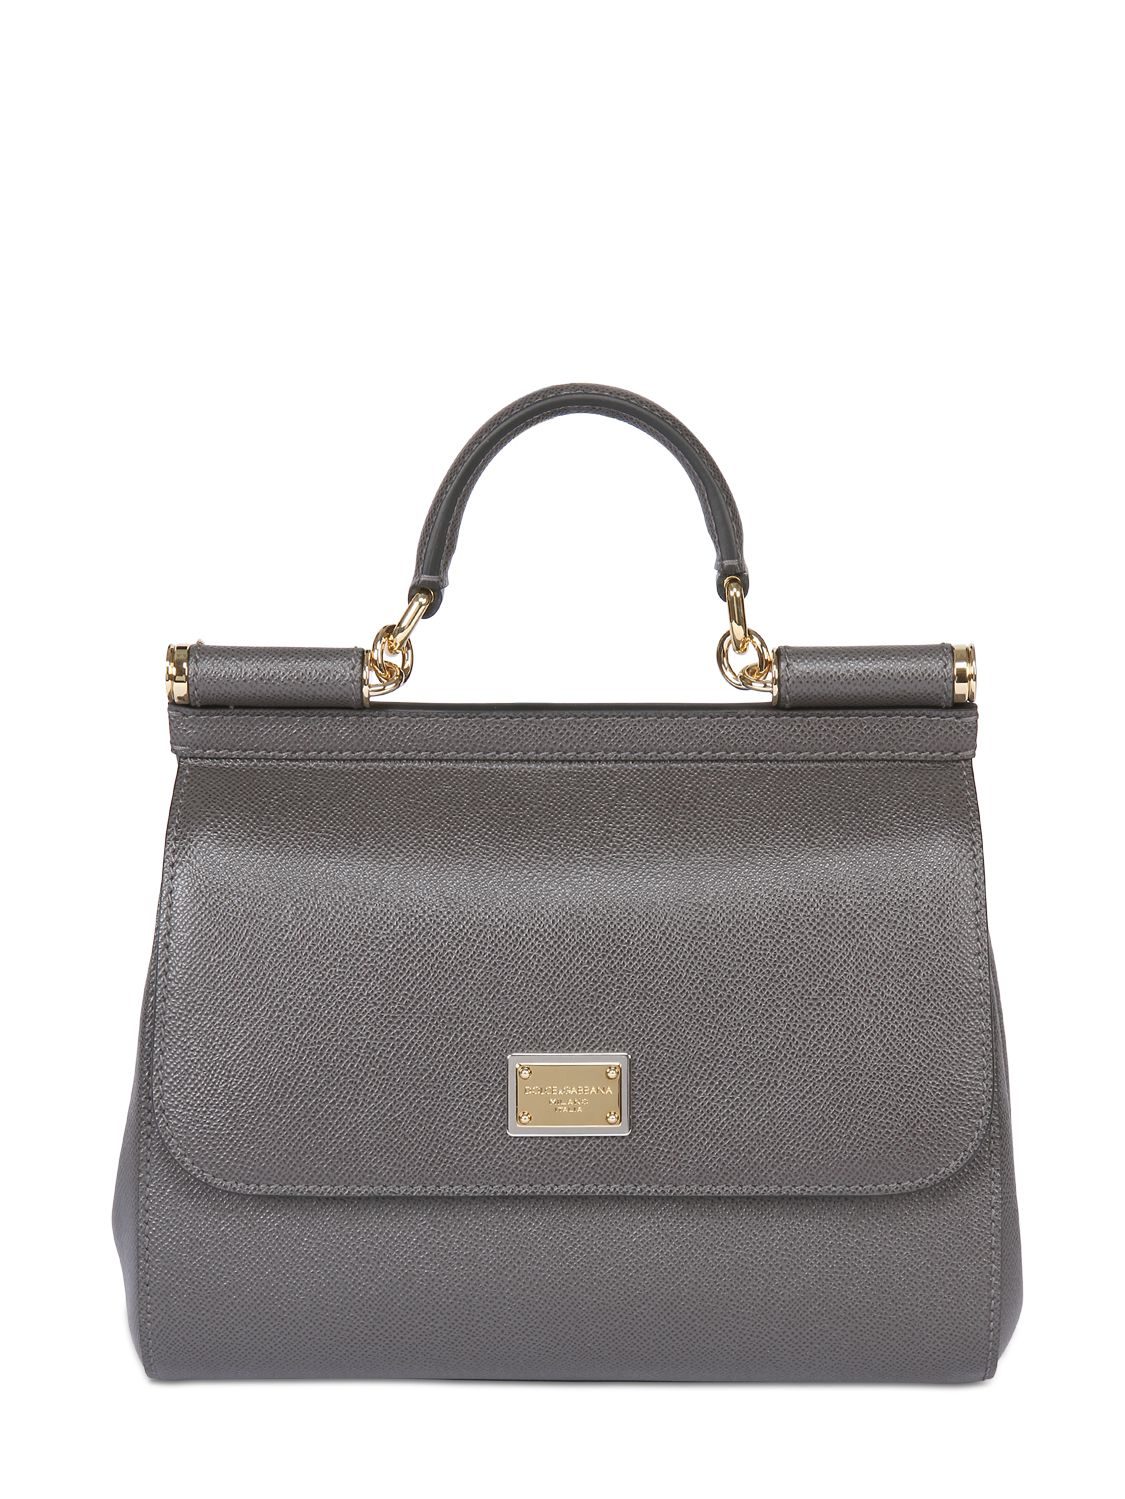 Dolce & Gabbana Medium Sicily Dauphine Leather Bag in Gray (GREY) | Lyst